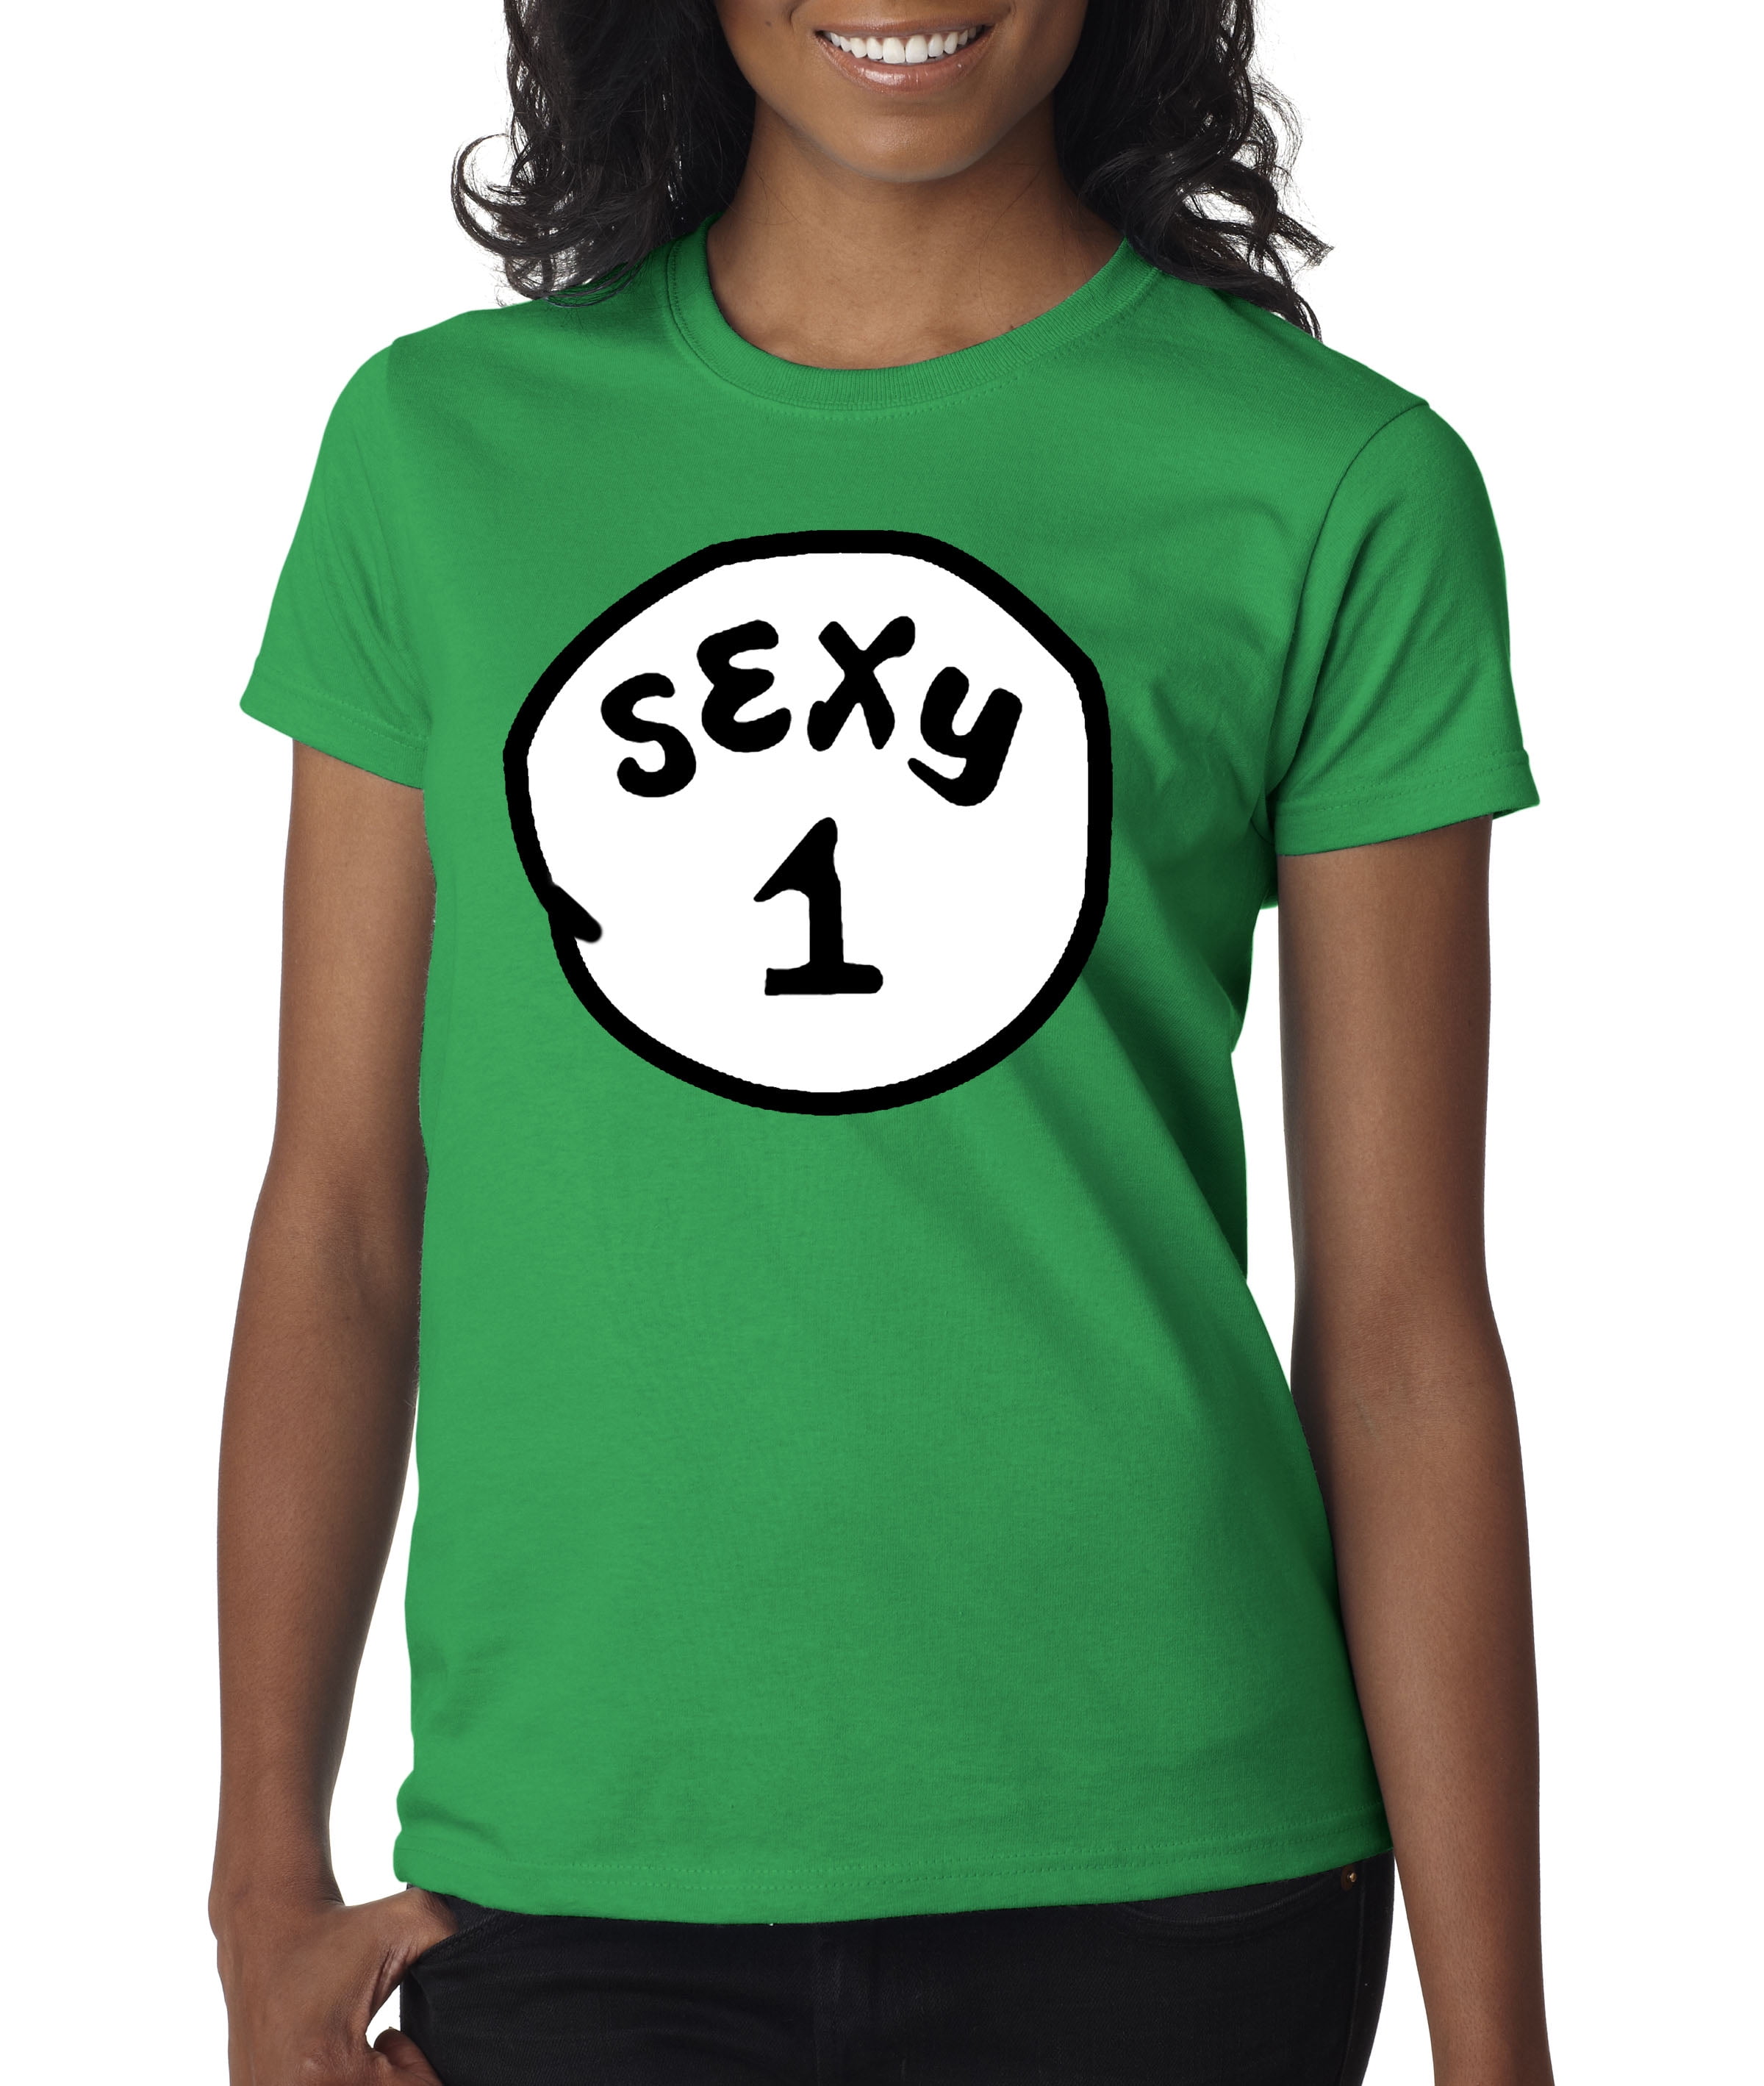 Sexy Thing T-shirts Kate Portman Porn Pix